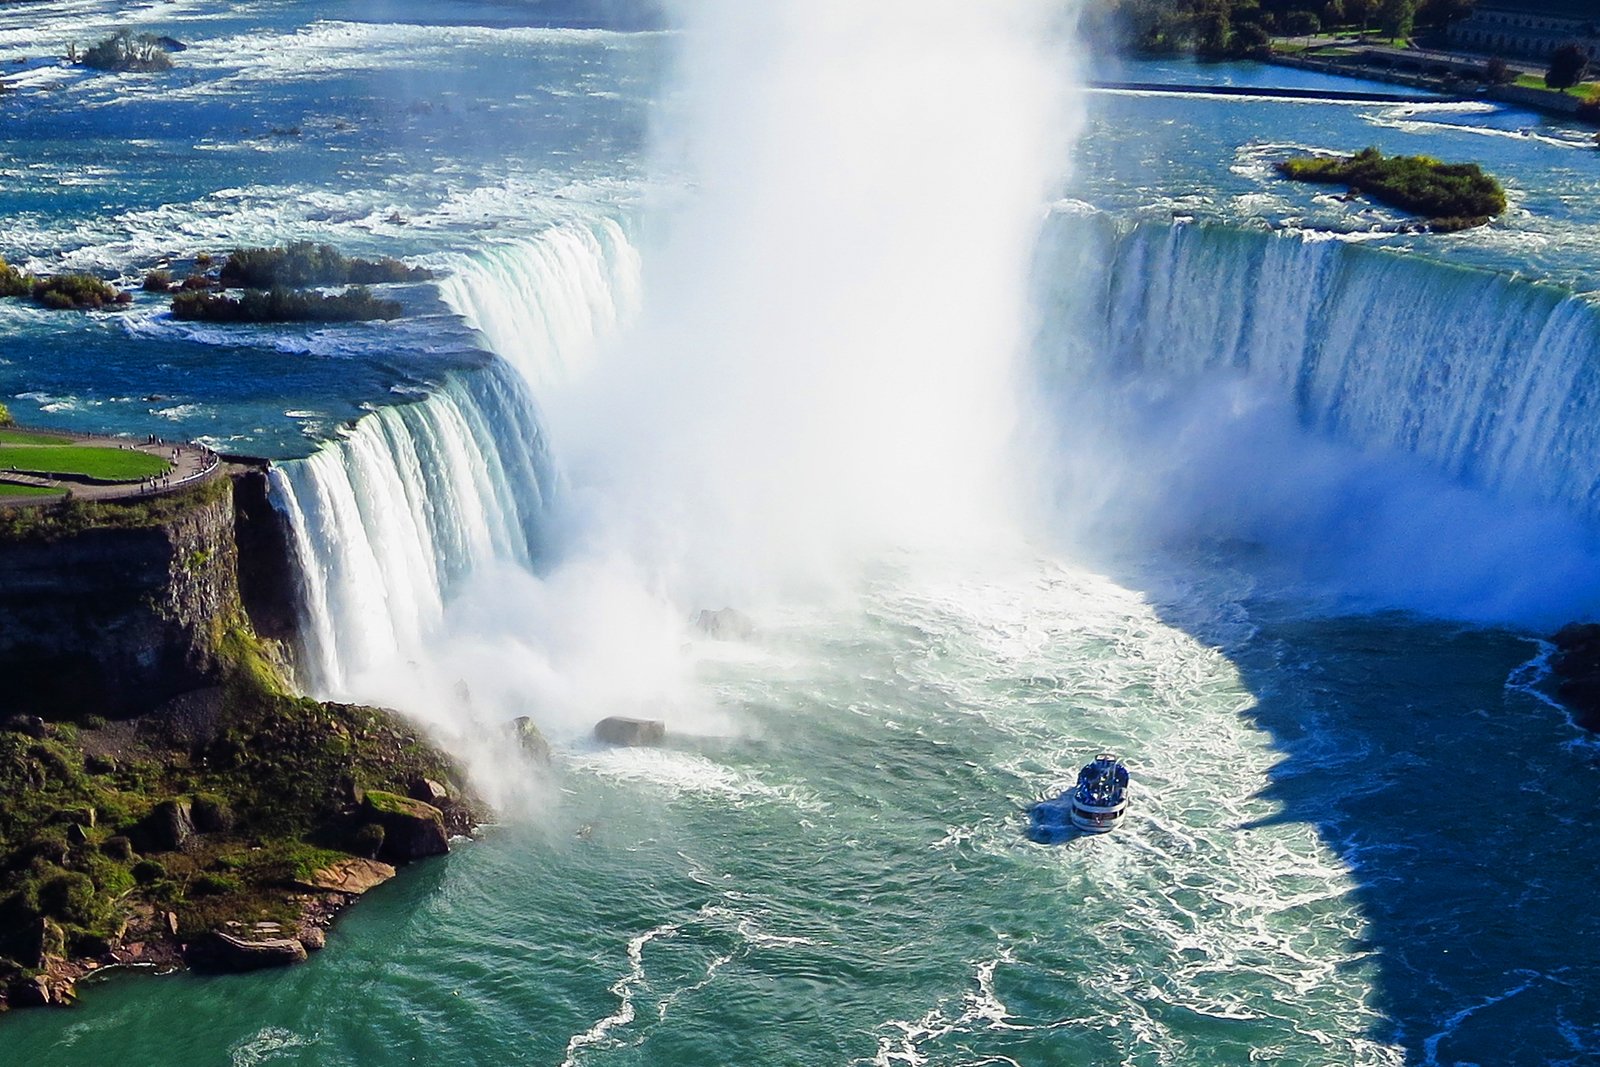 How to see Niagara Falls in Toronto